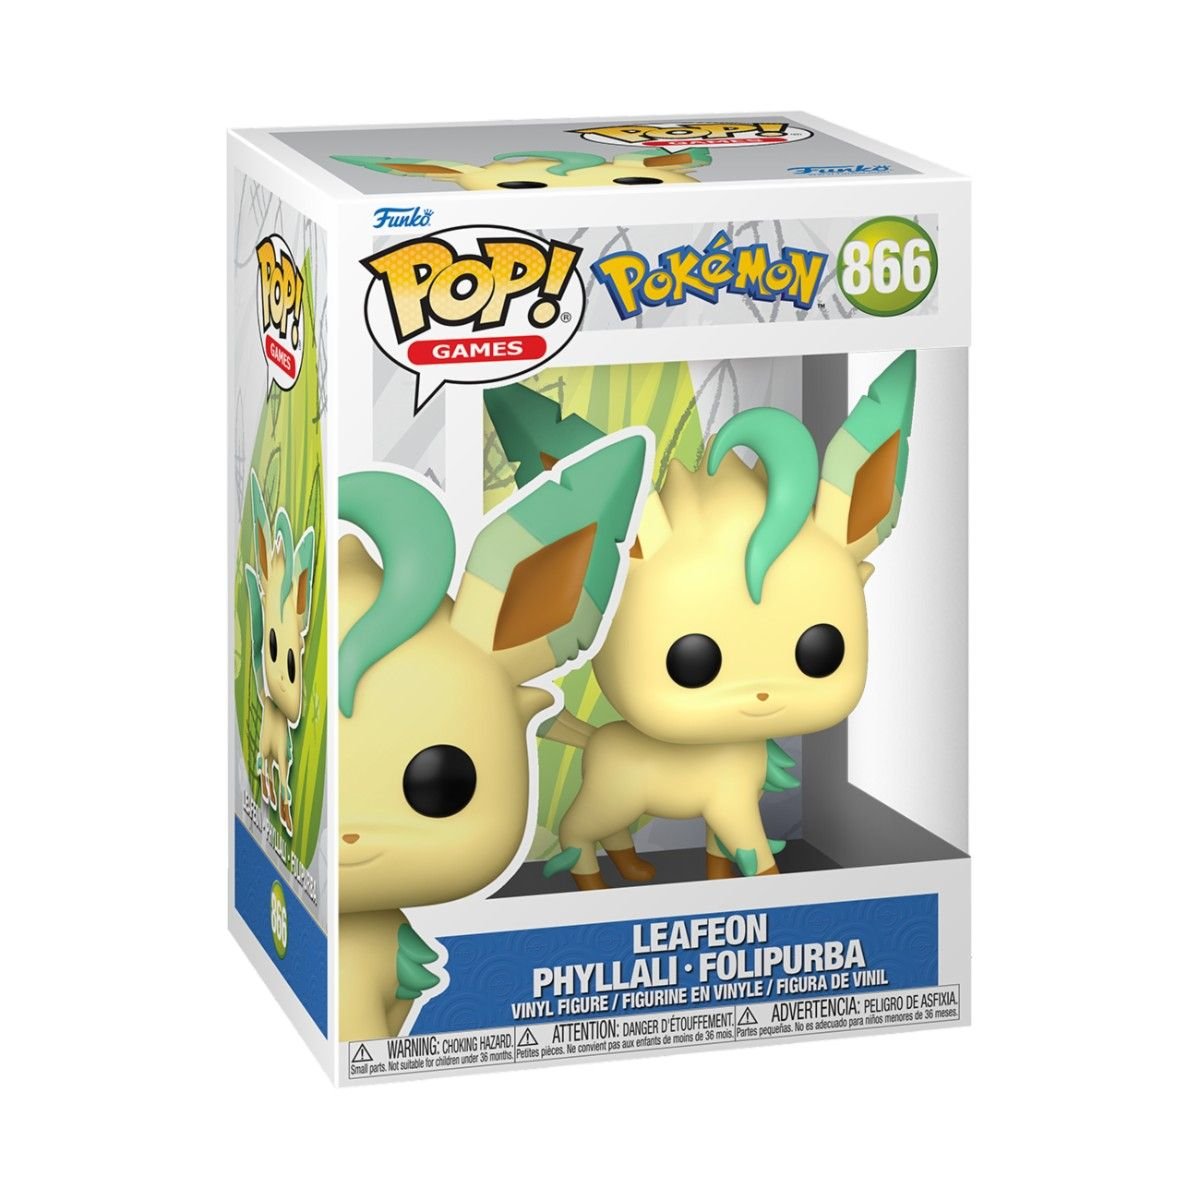 Leafeon - Pokemon - Funko POP! Games (866)